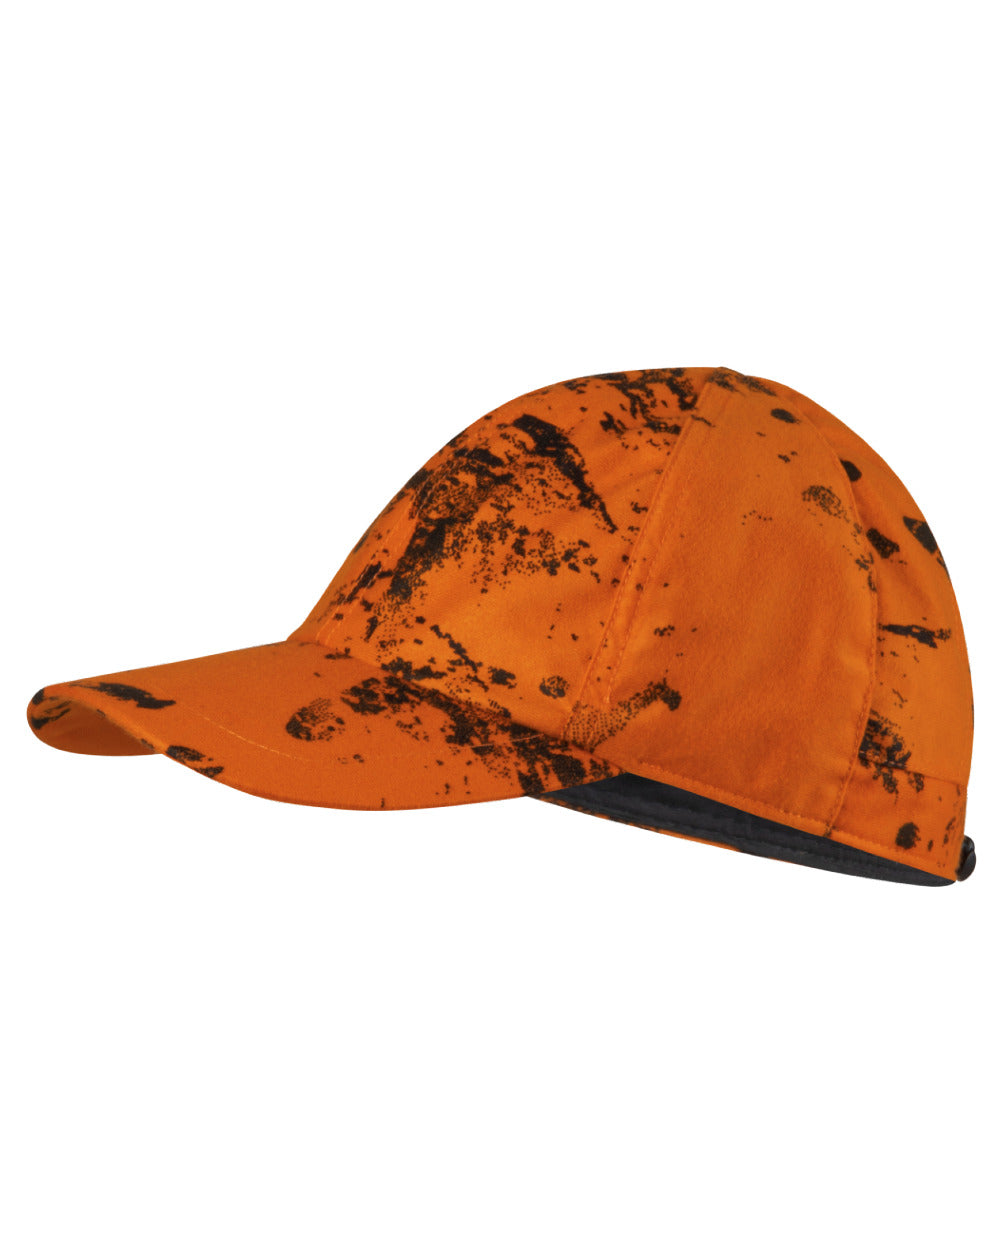 InVis Orange Blaze Coloured Seeland Avail Camo Cap On A White Background 